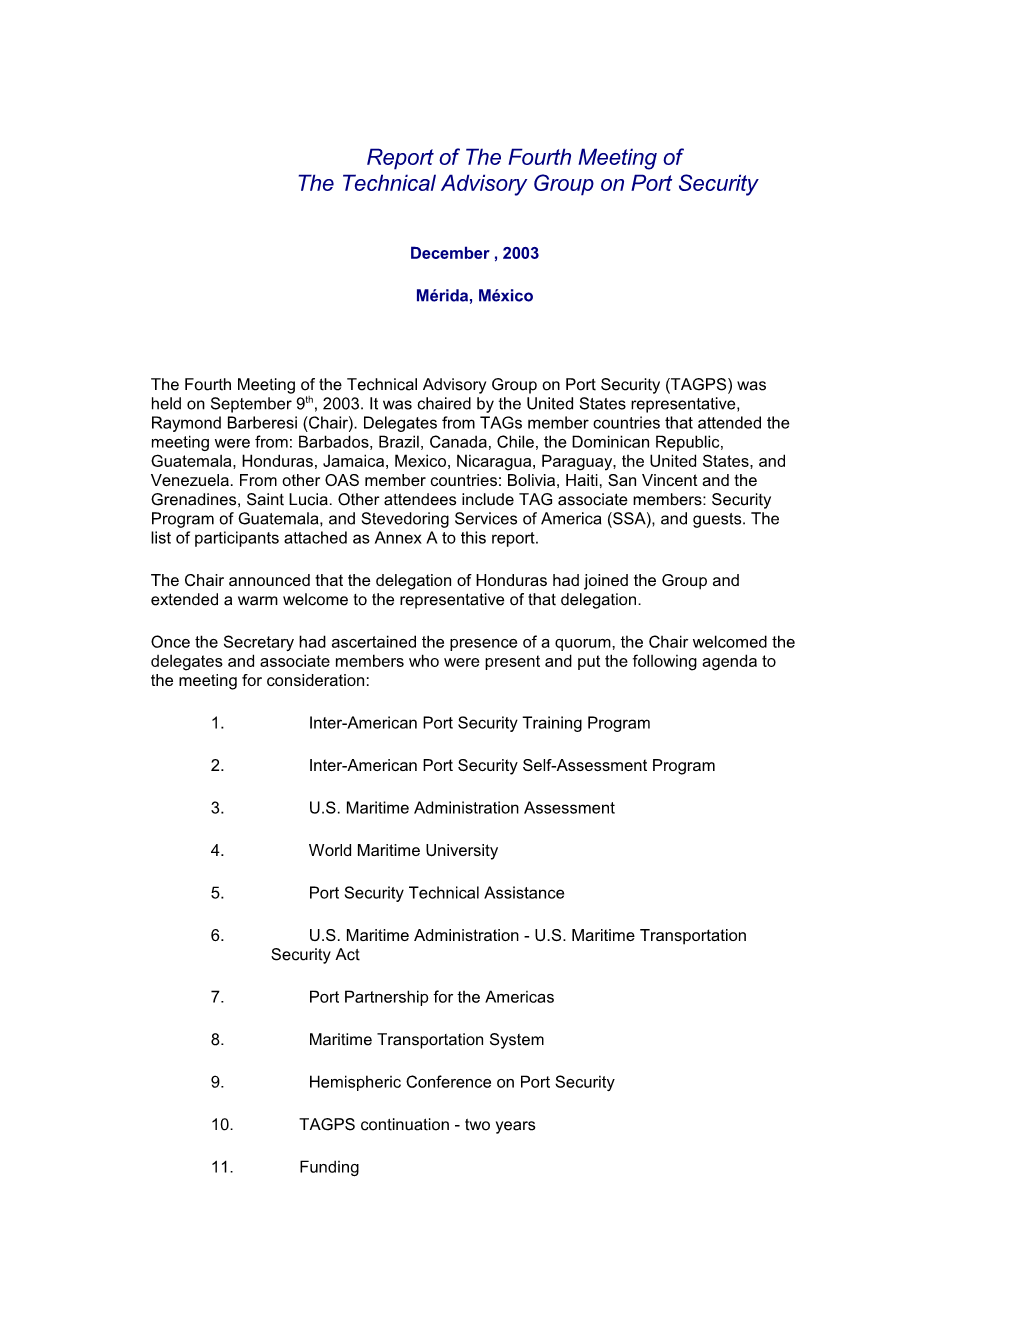 Inter-Americanport Security Training Program (Agenda Item 1)